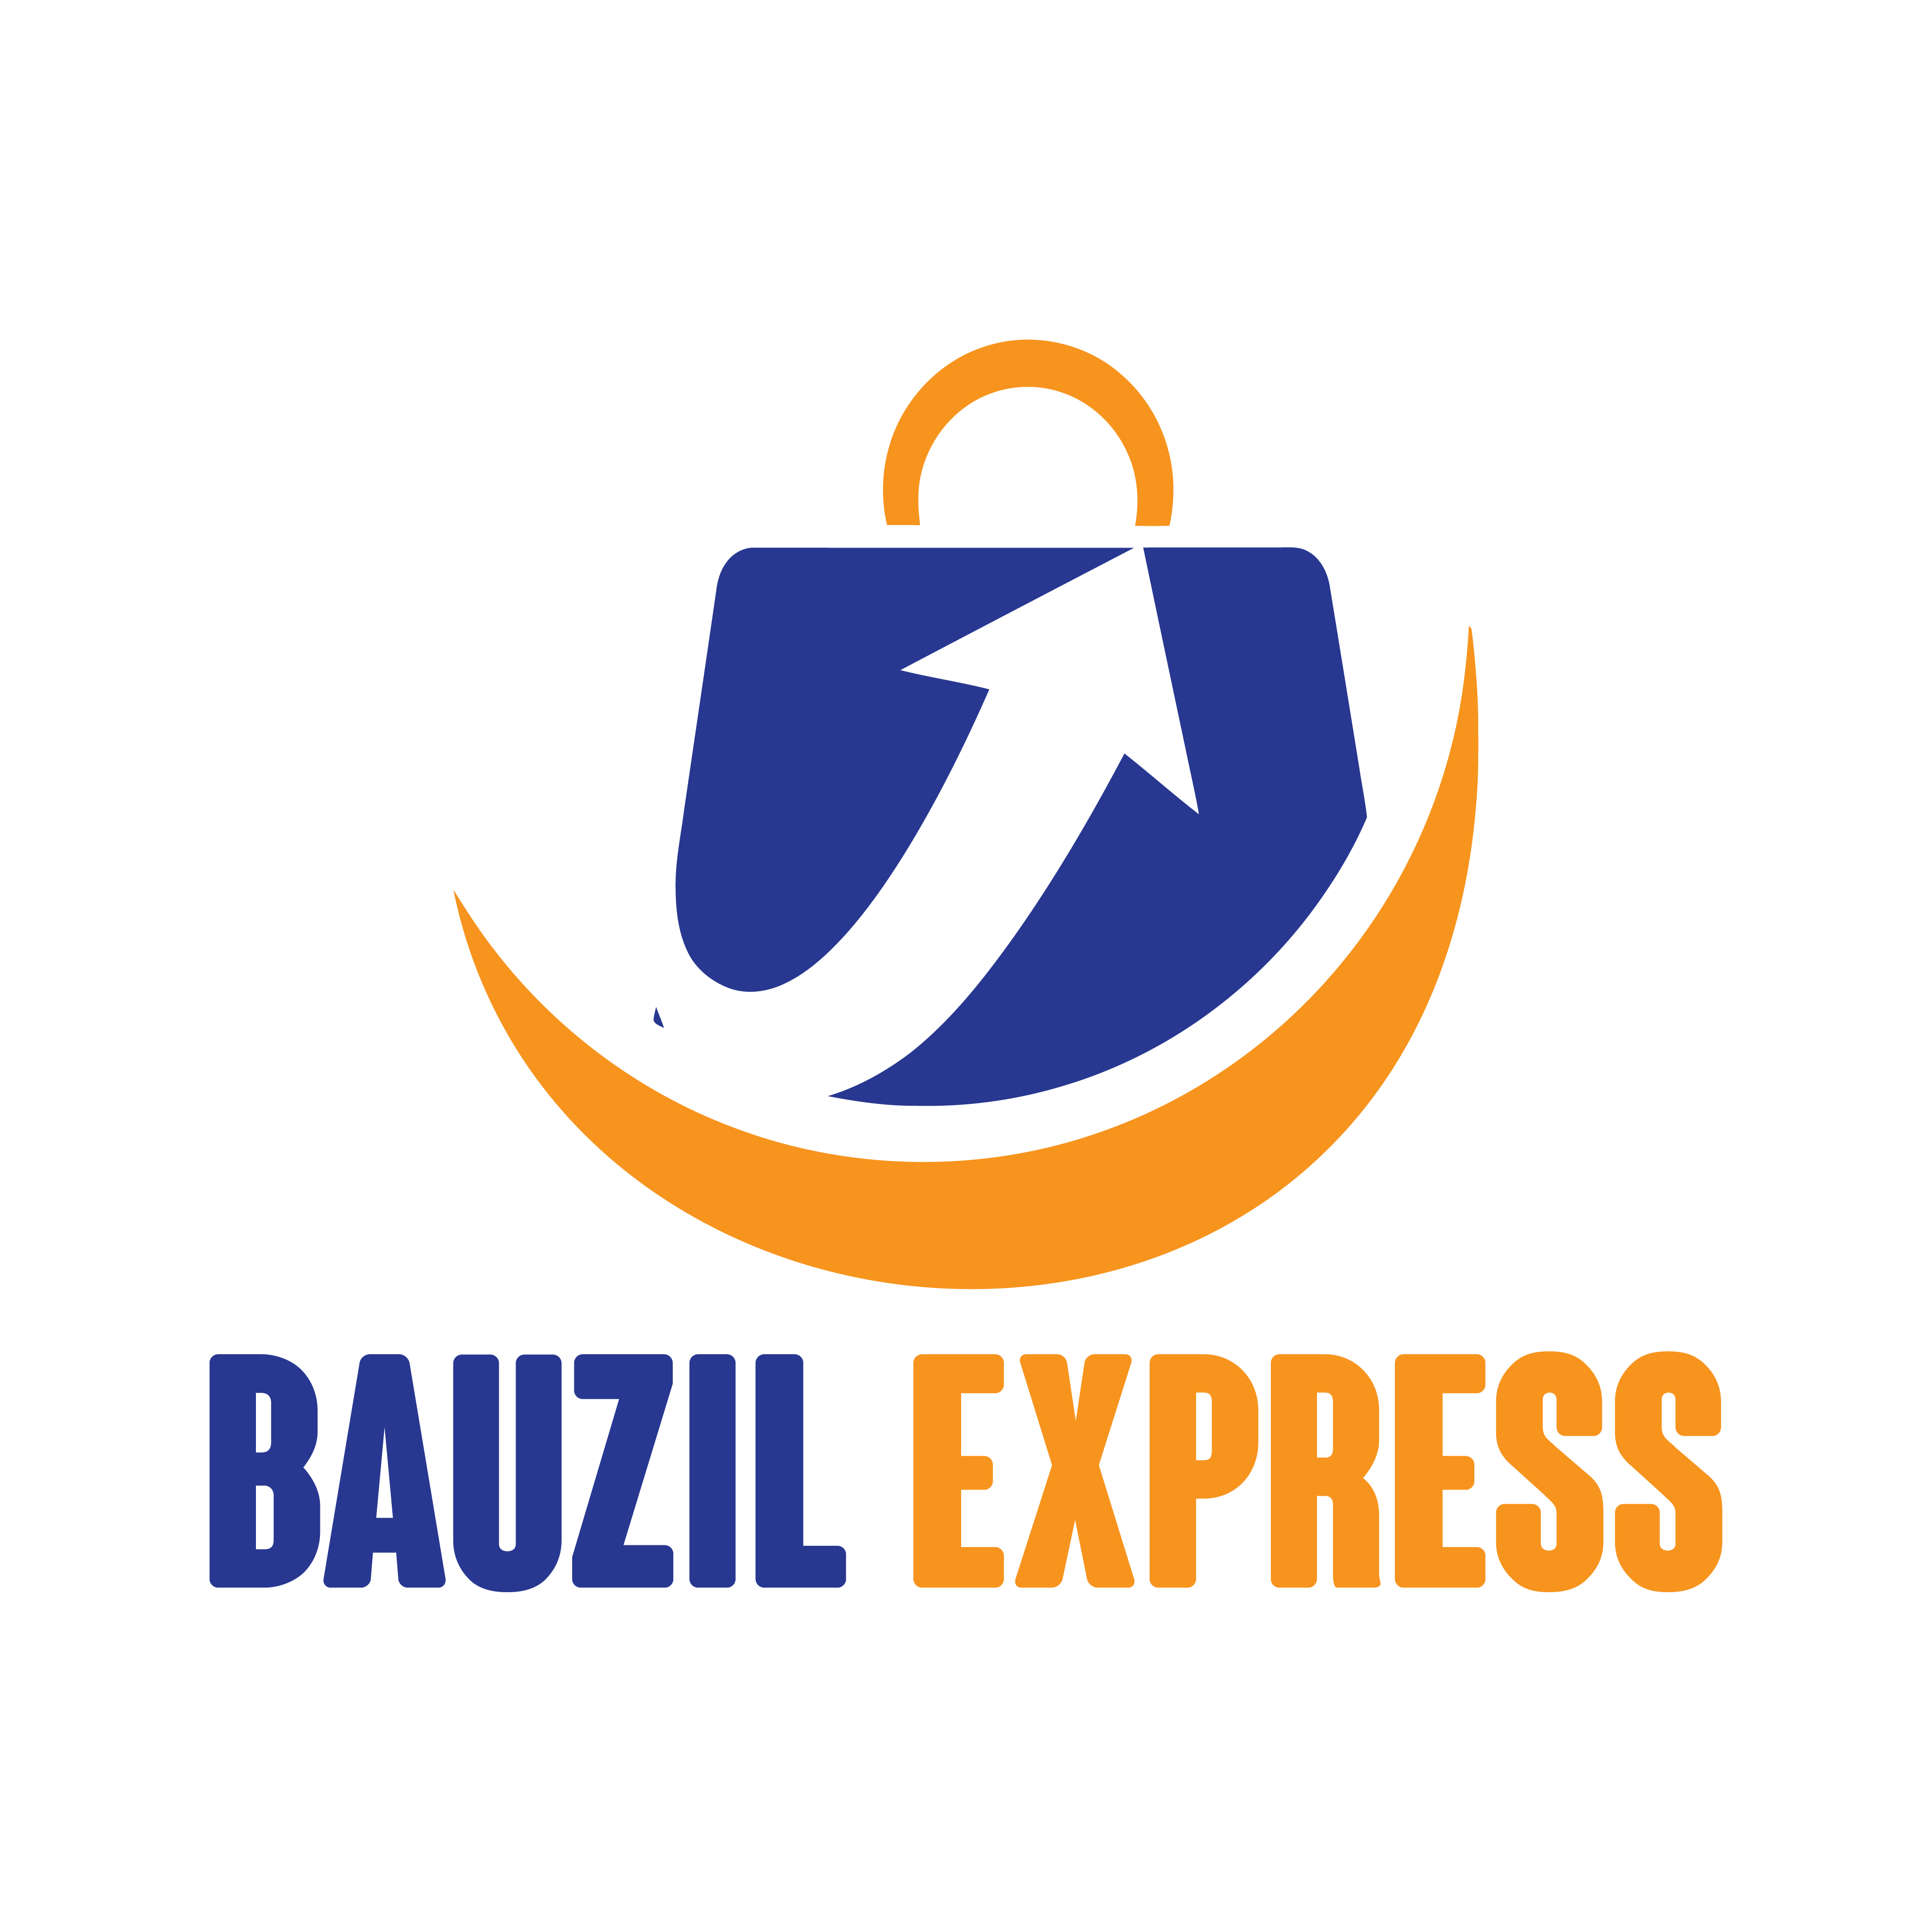 Bauzil Express